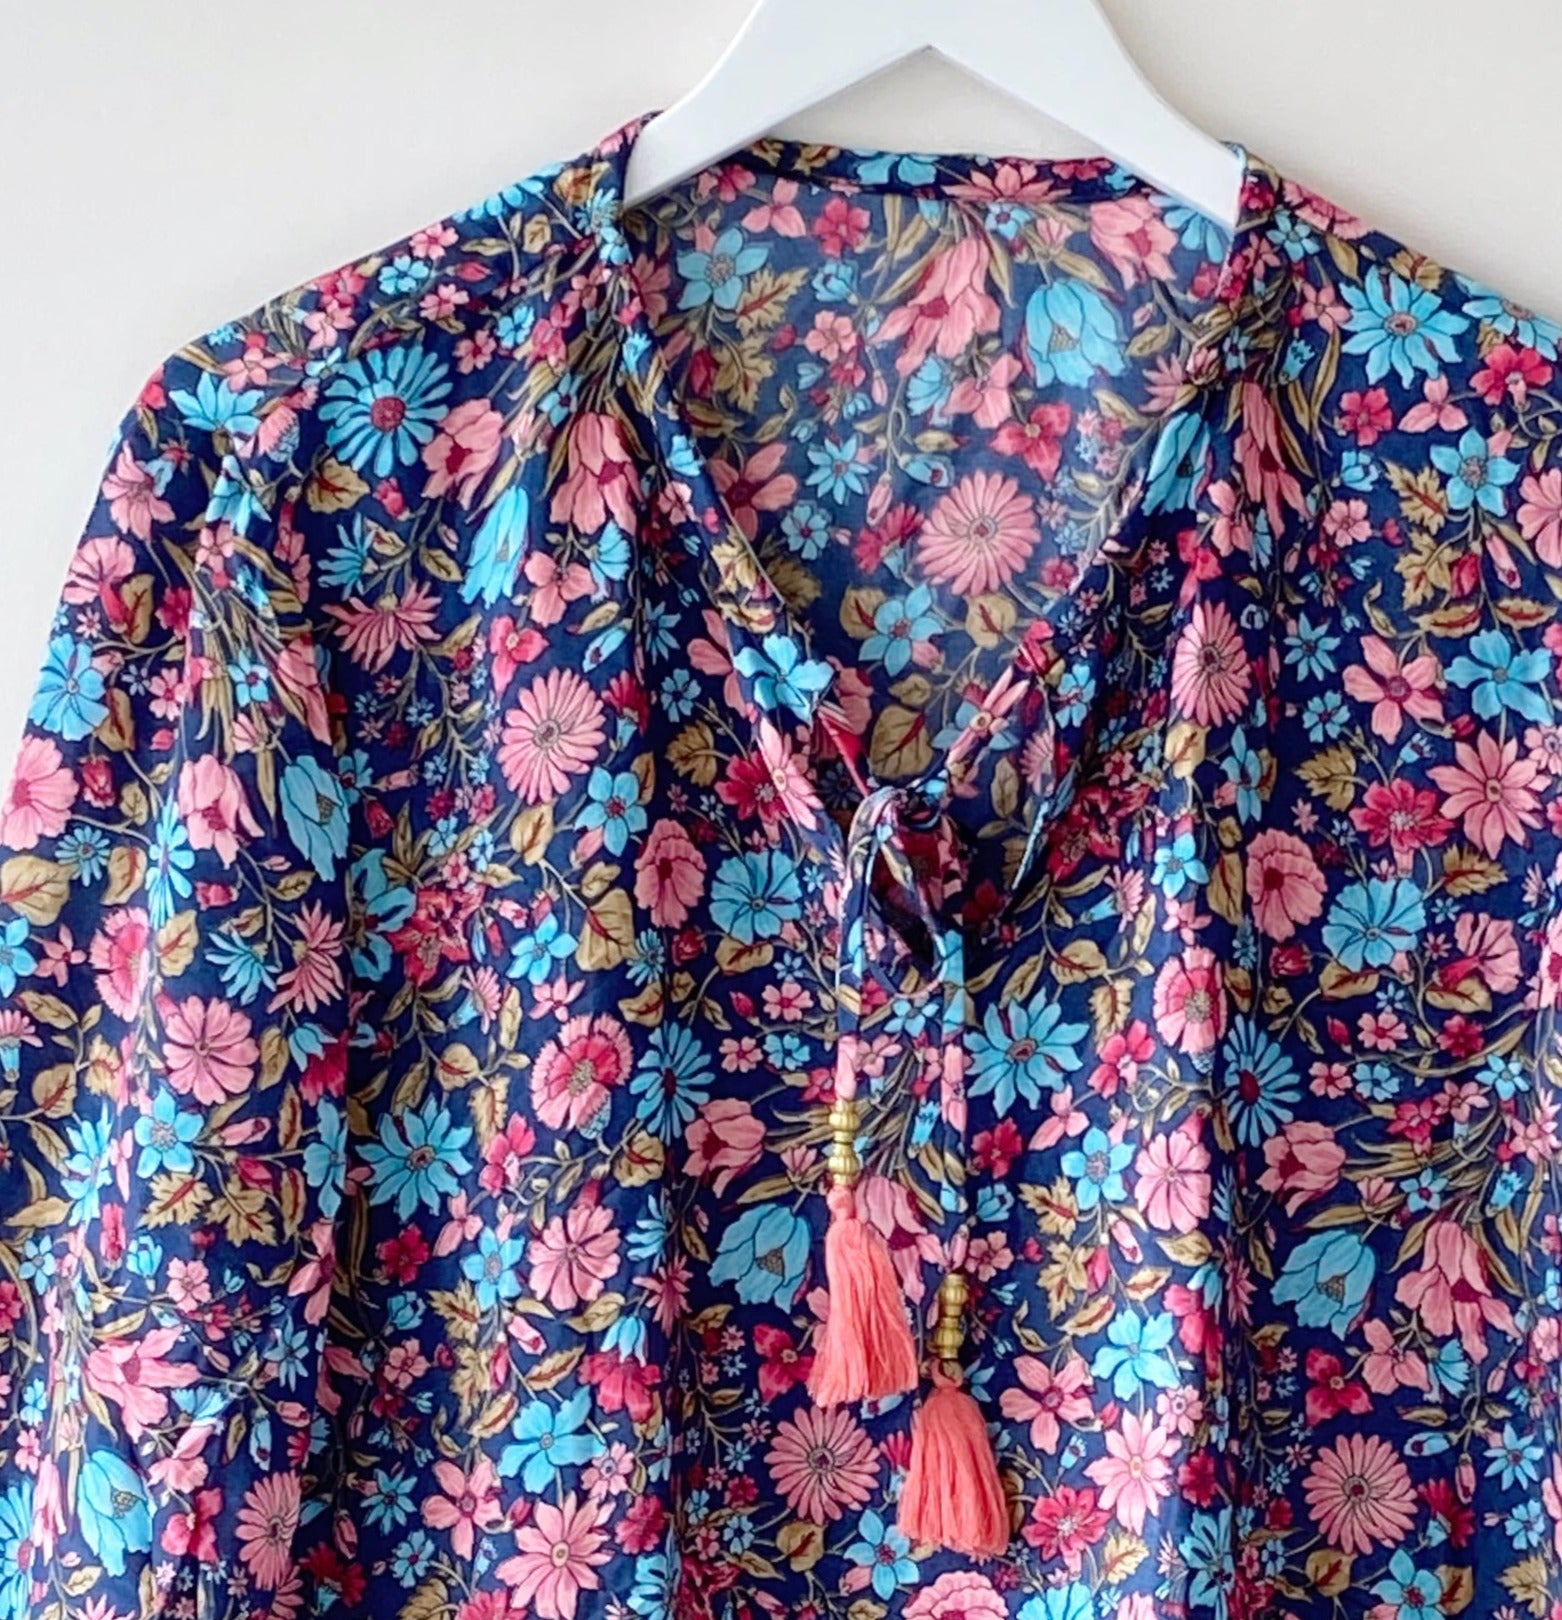 Florence navy/purple floral-print blouse free size UK 8-14blouse